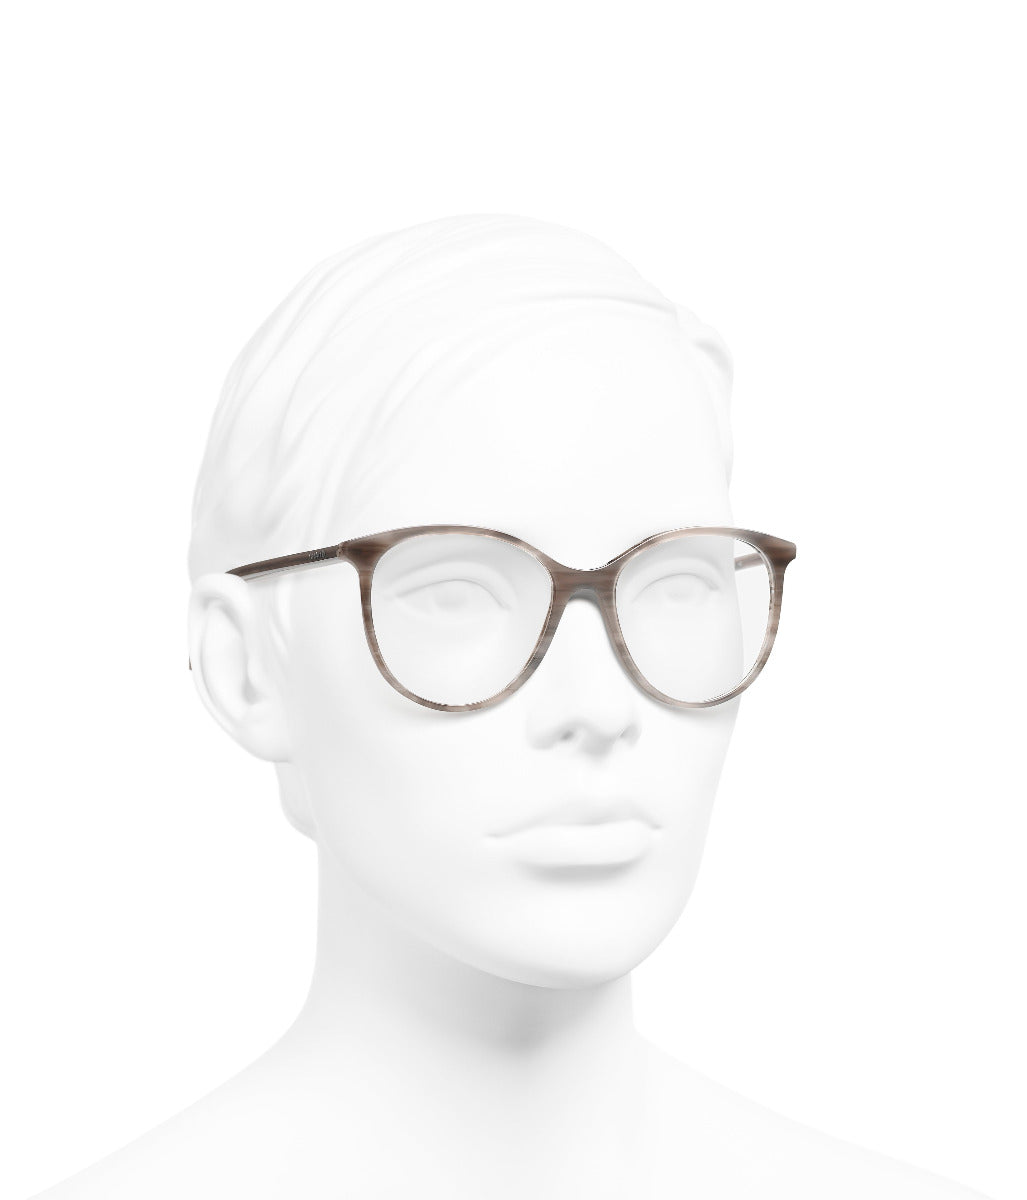 Chanel 3432 1708 Glasses - US